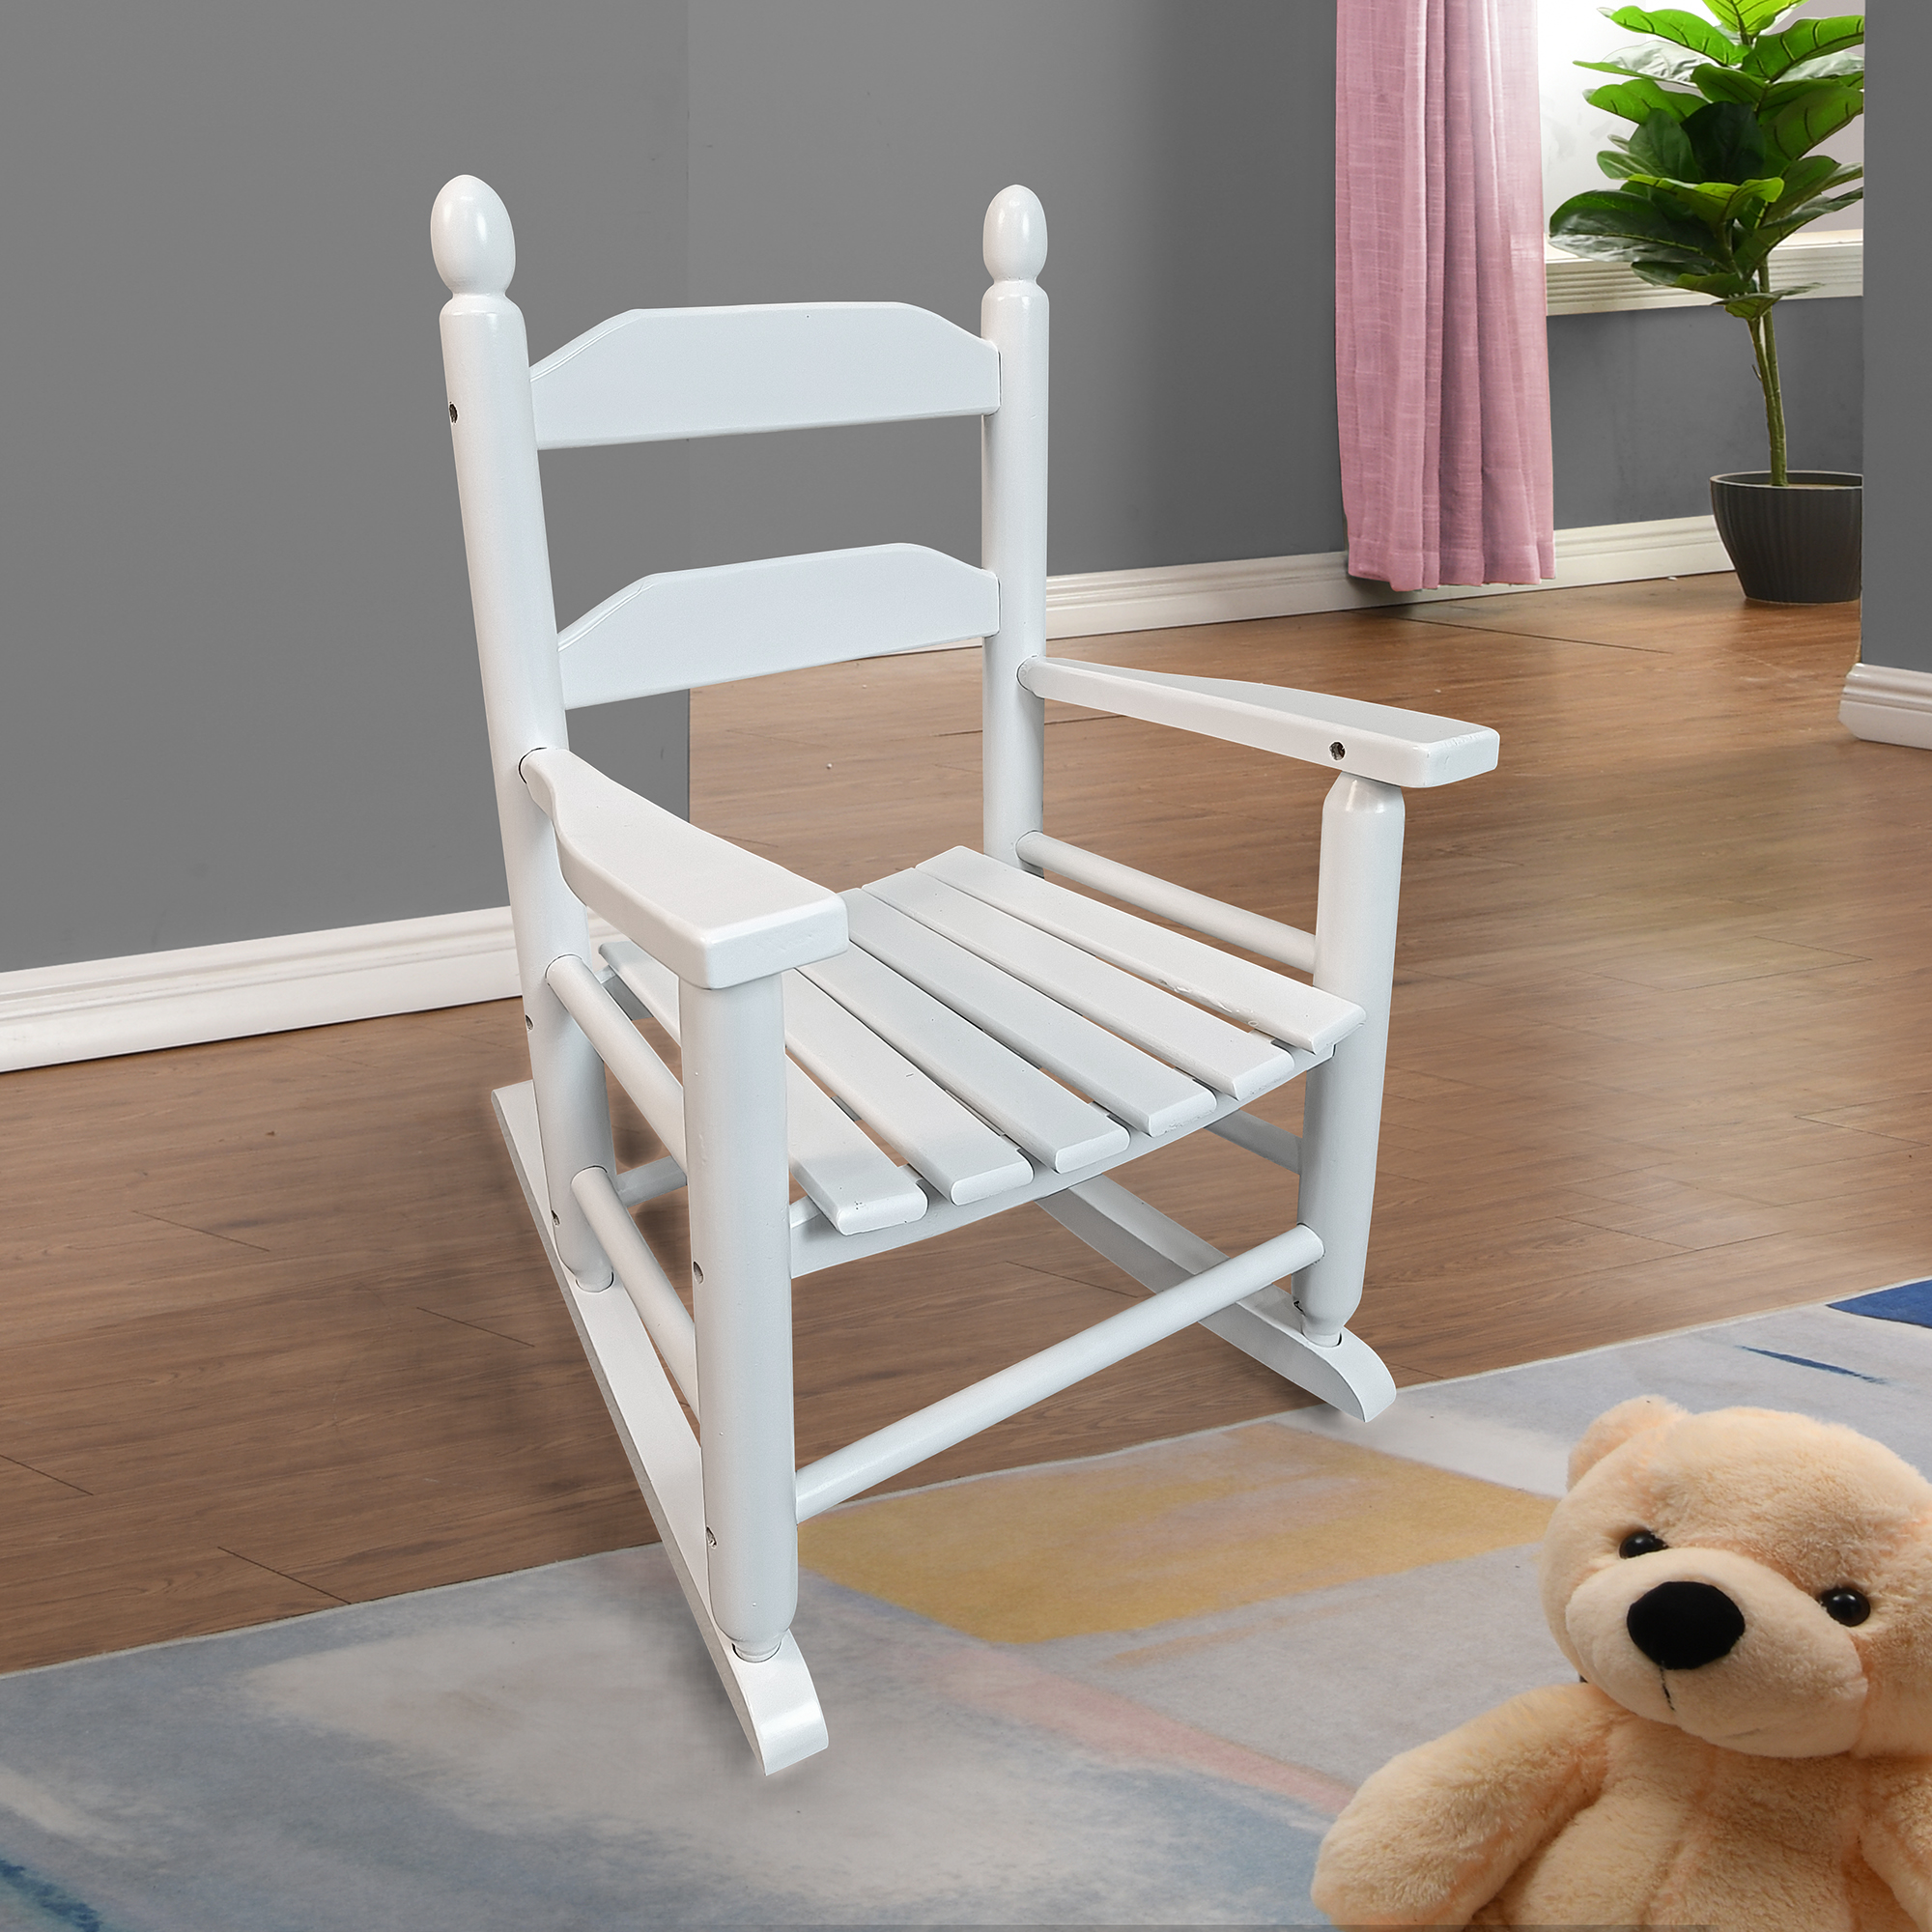 Garden Wooden Furniture Child Rocking Chair, Porch Rocking Chair with Handrail, Oak - image 1 of 7